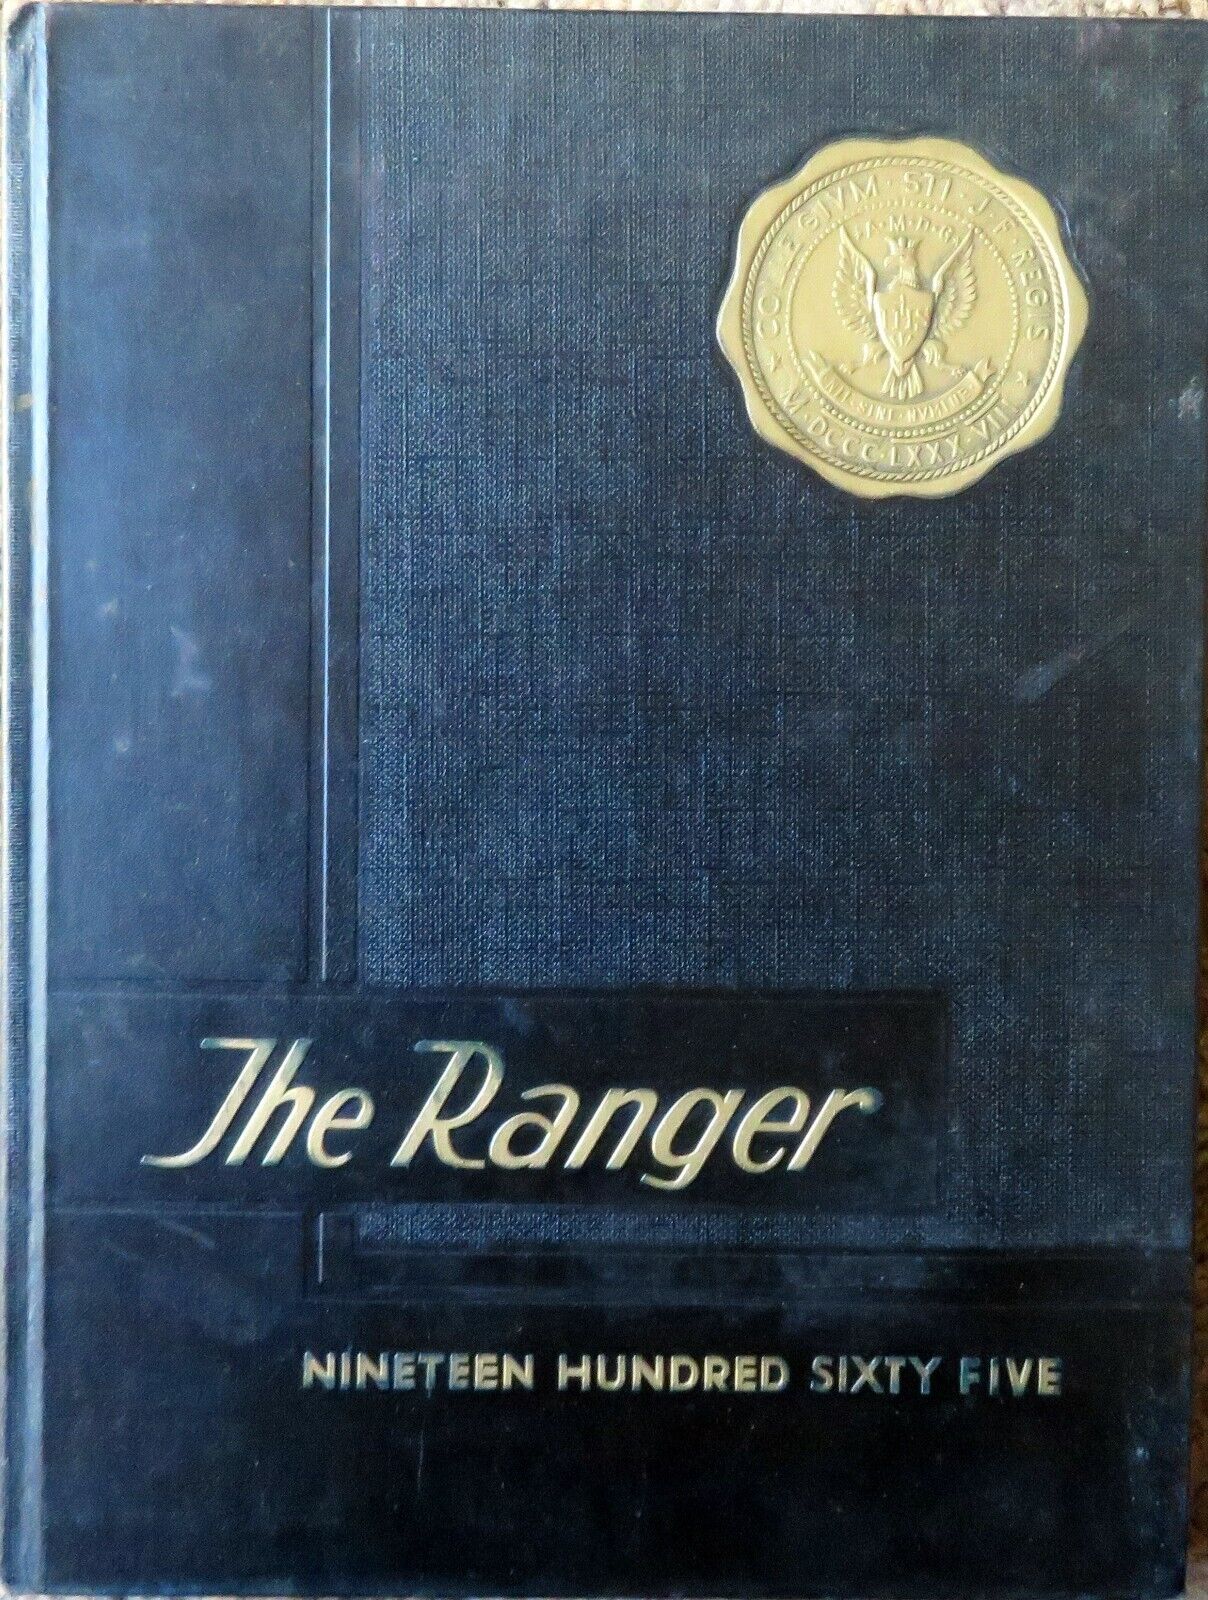 REGIS COLLEGE, Denver CO, The 1965 Ranger Yearbook, Volume 53